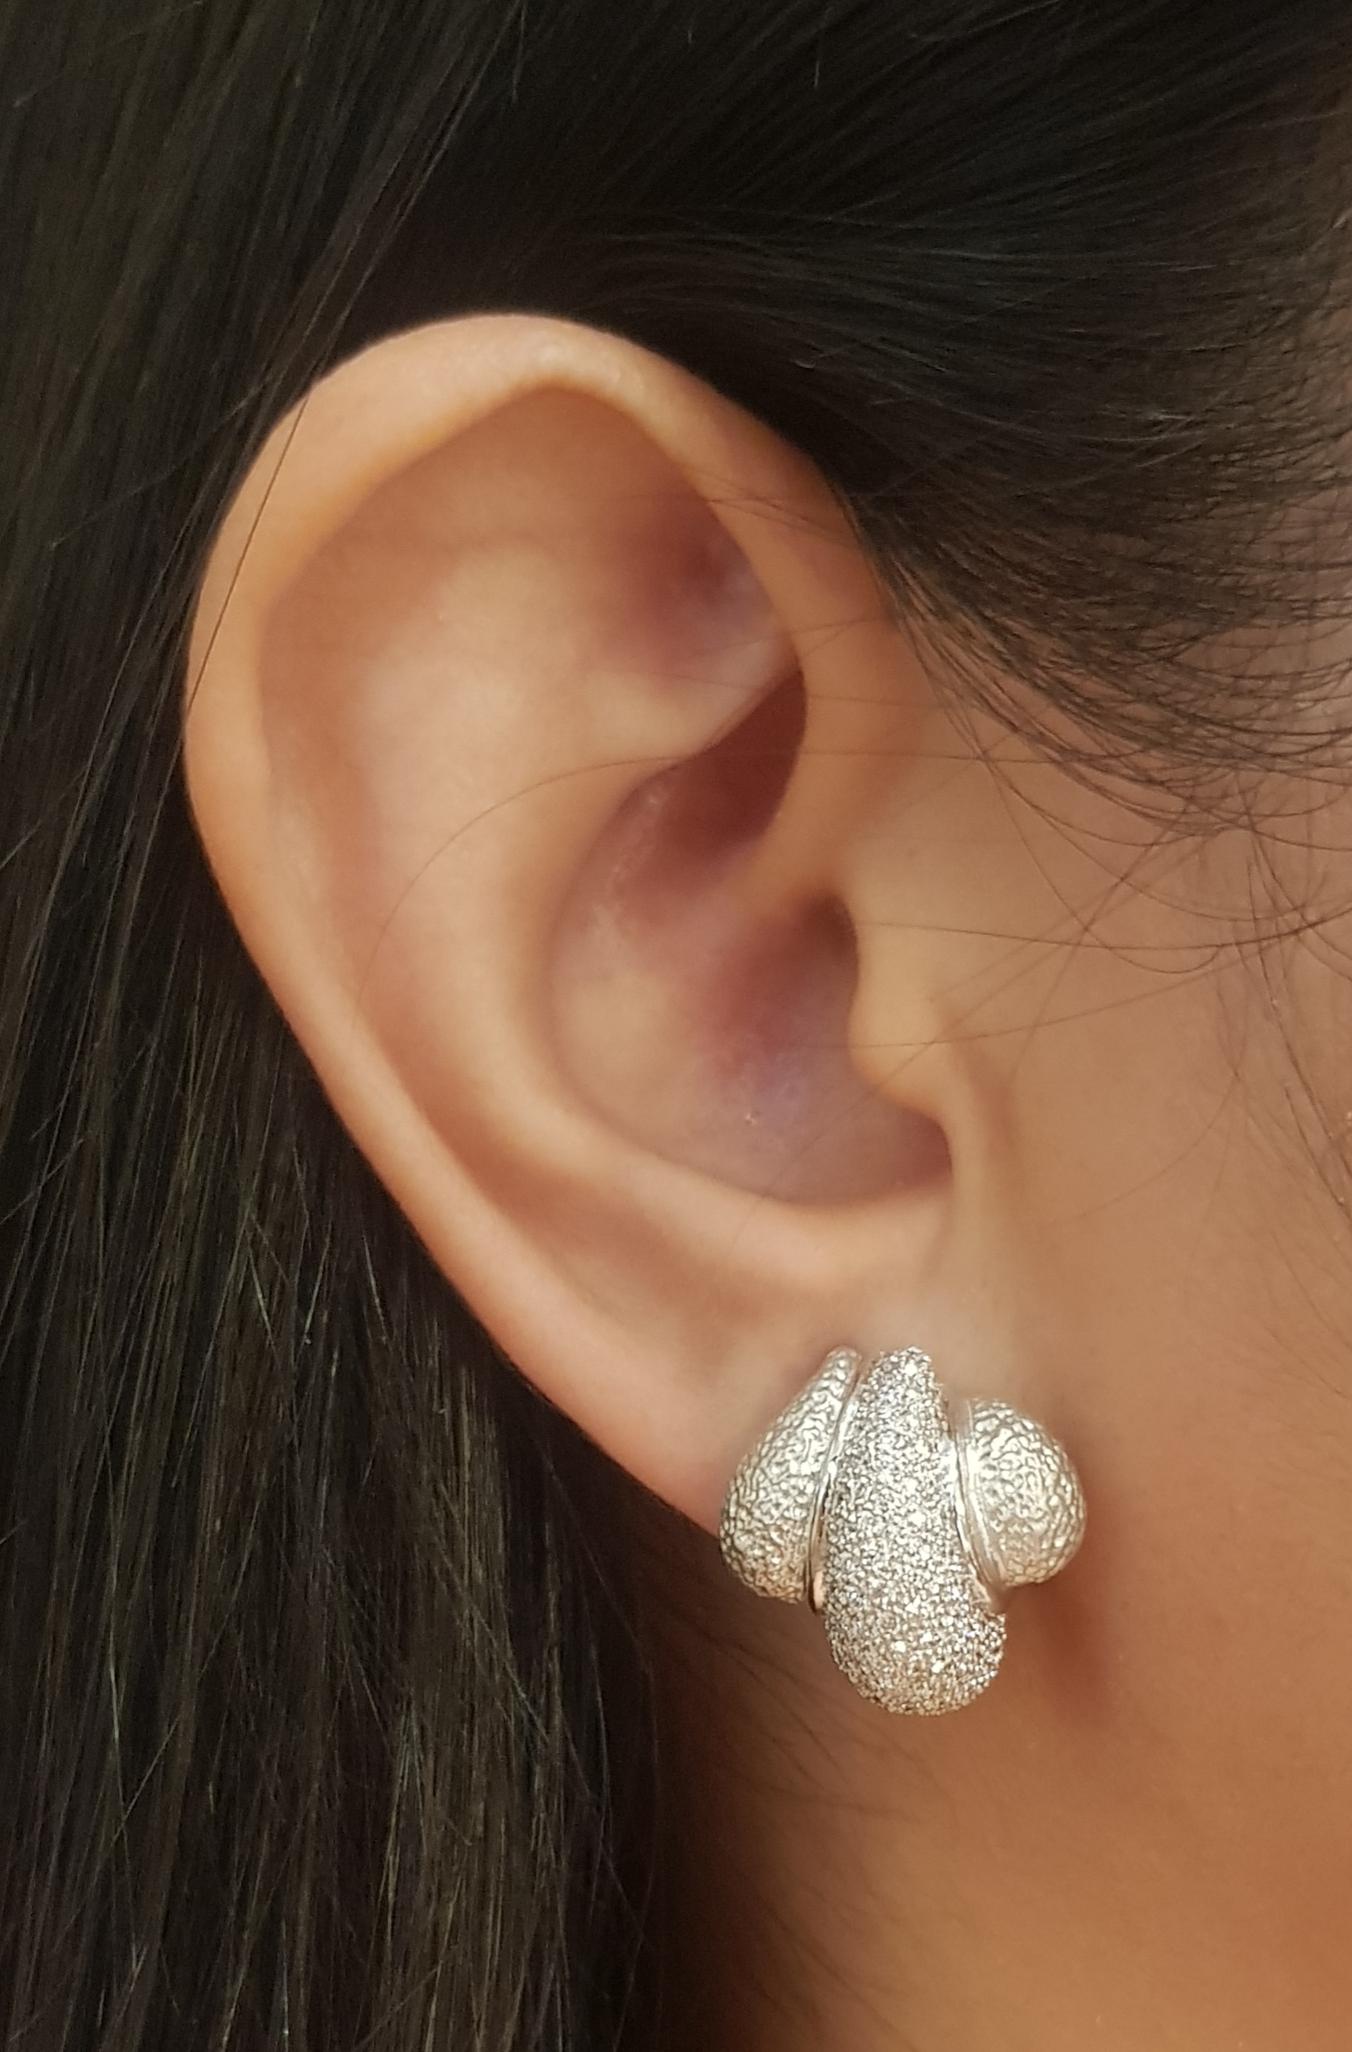 Diamond 1.94 carats Earrings set in 18K White Gold Settings

Width: 1.8 cm 
Length: 1.8 cm
Total Weight: 17.17 grams

